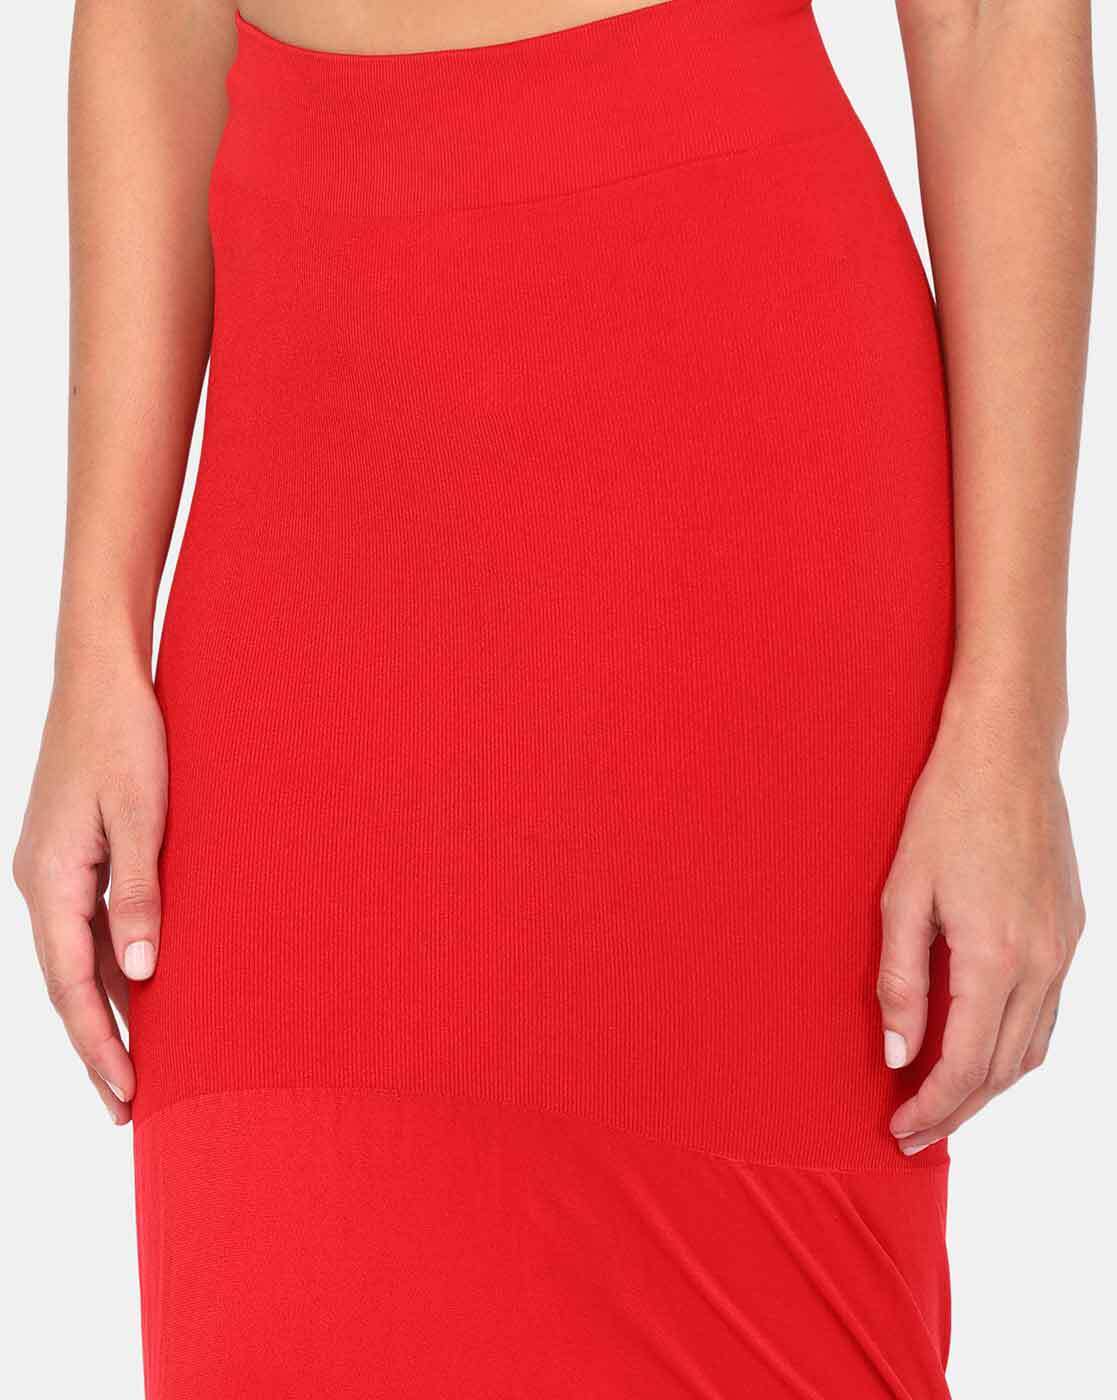 Buy Red Shapewear for Women by Zivame Online